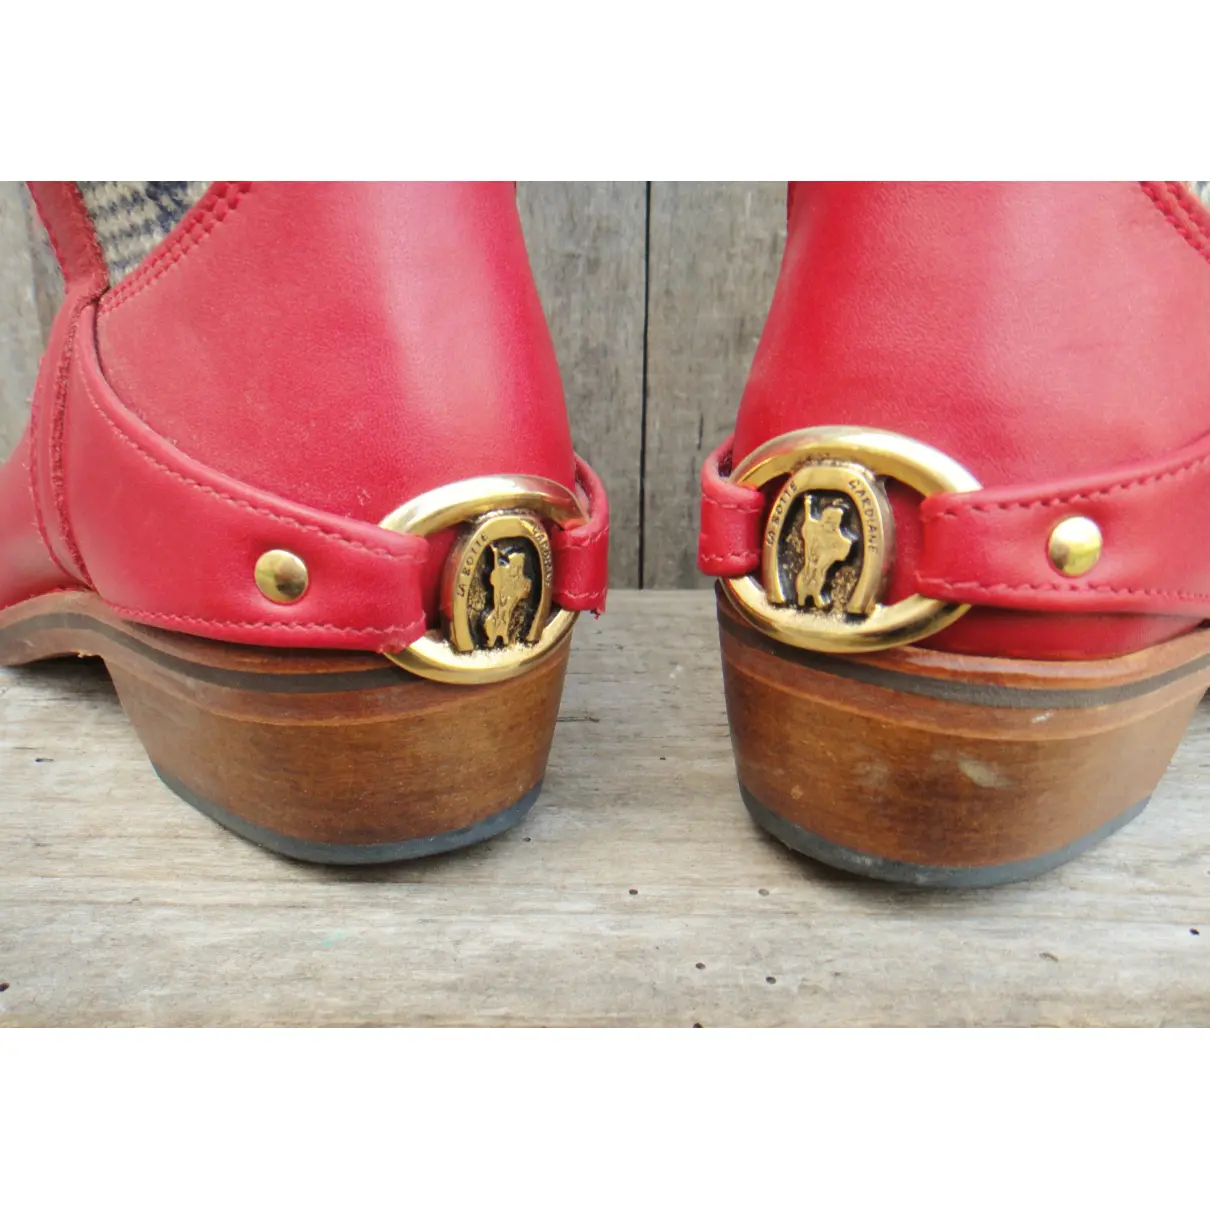 Leather western boots La Botte Gardiane